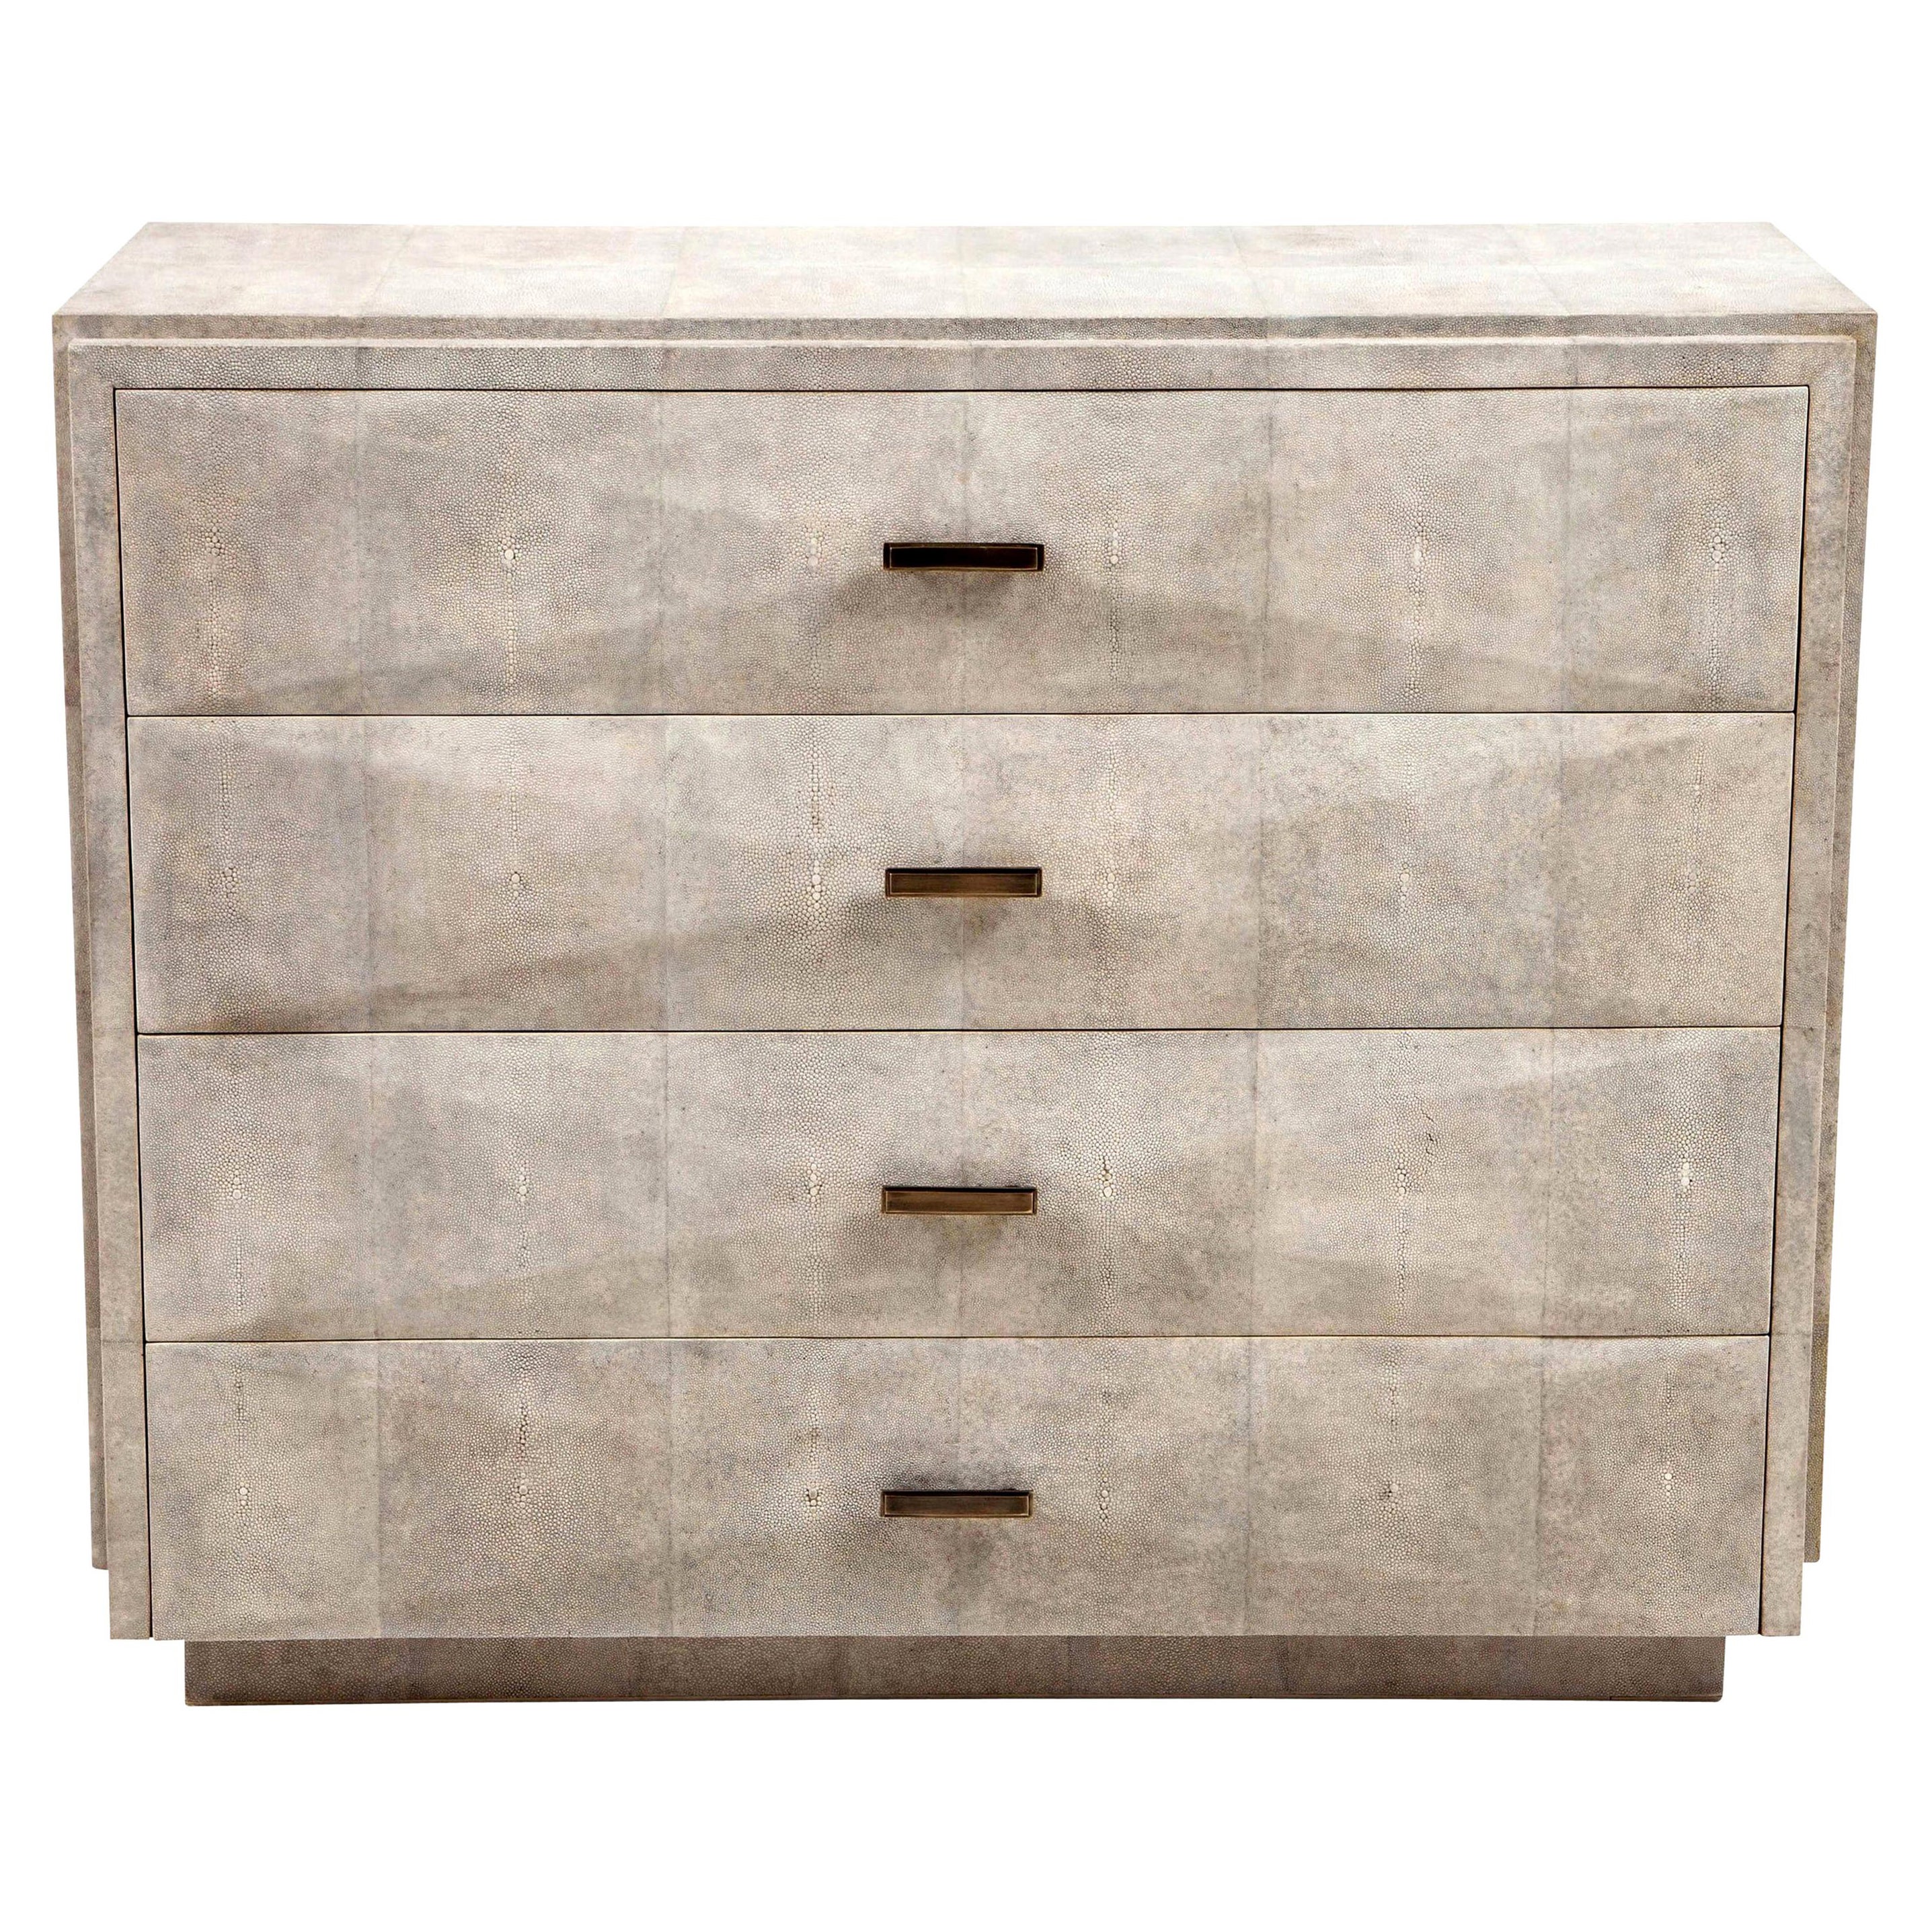 Shagreen Dresser with Brass Handles, Art Deco Style, Cream, Contemporary